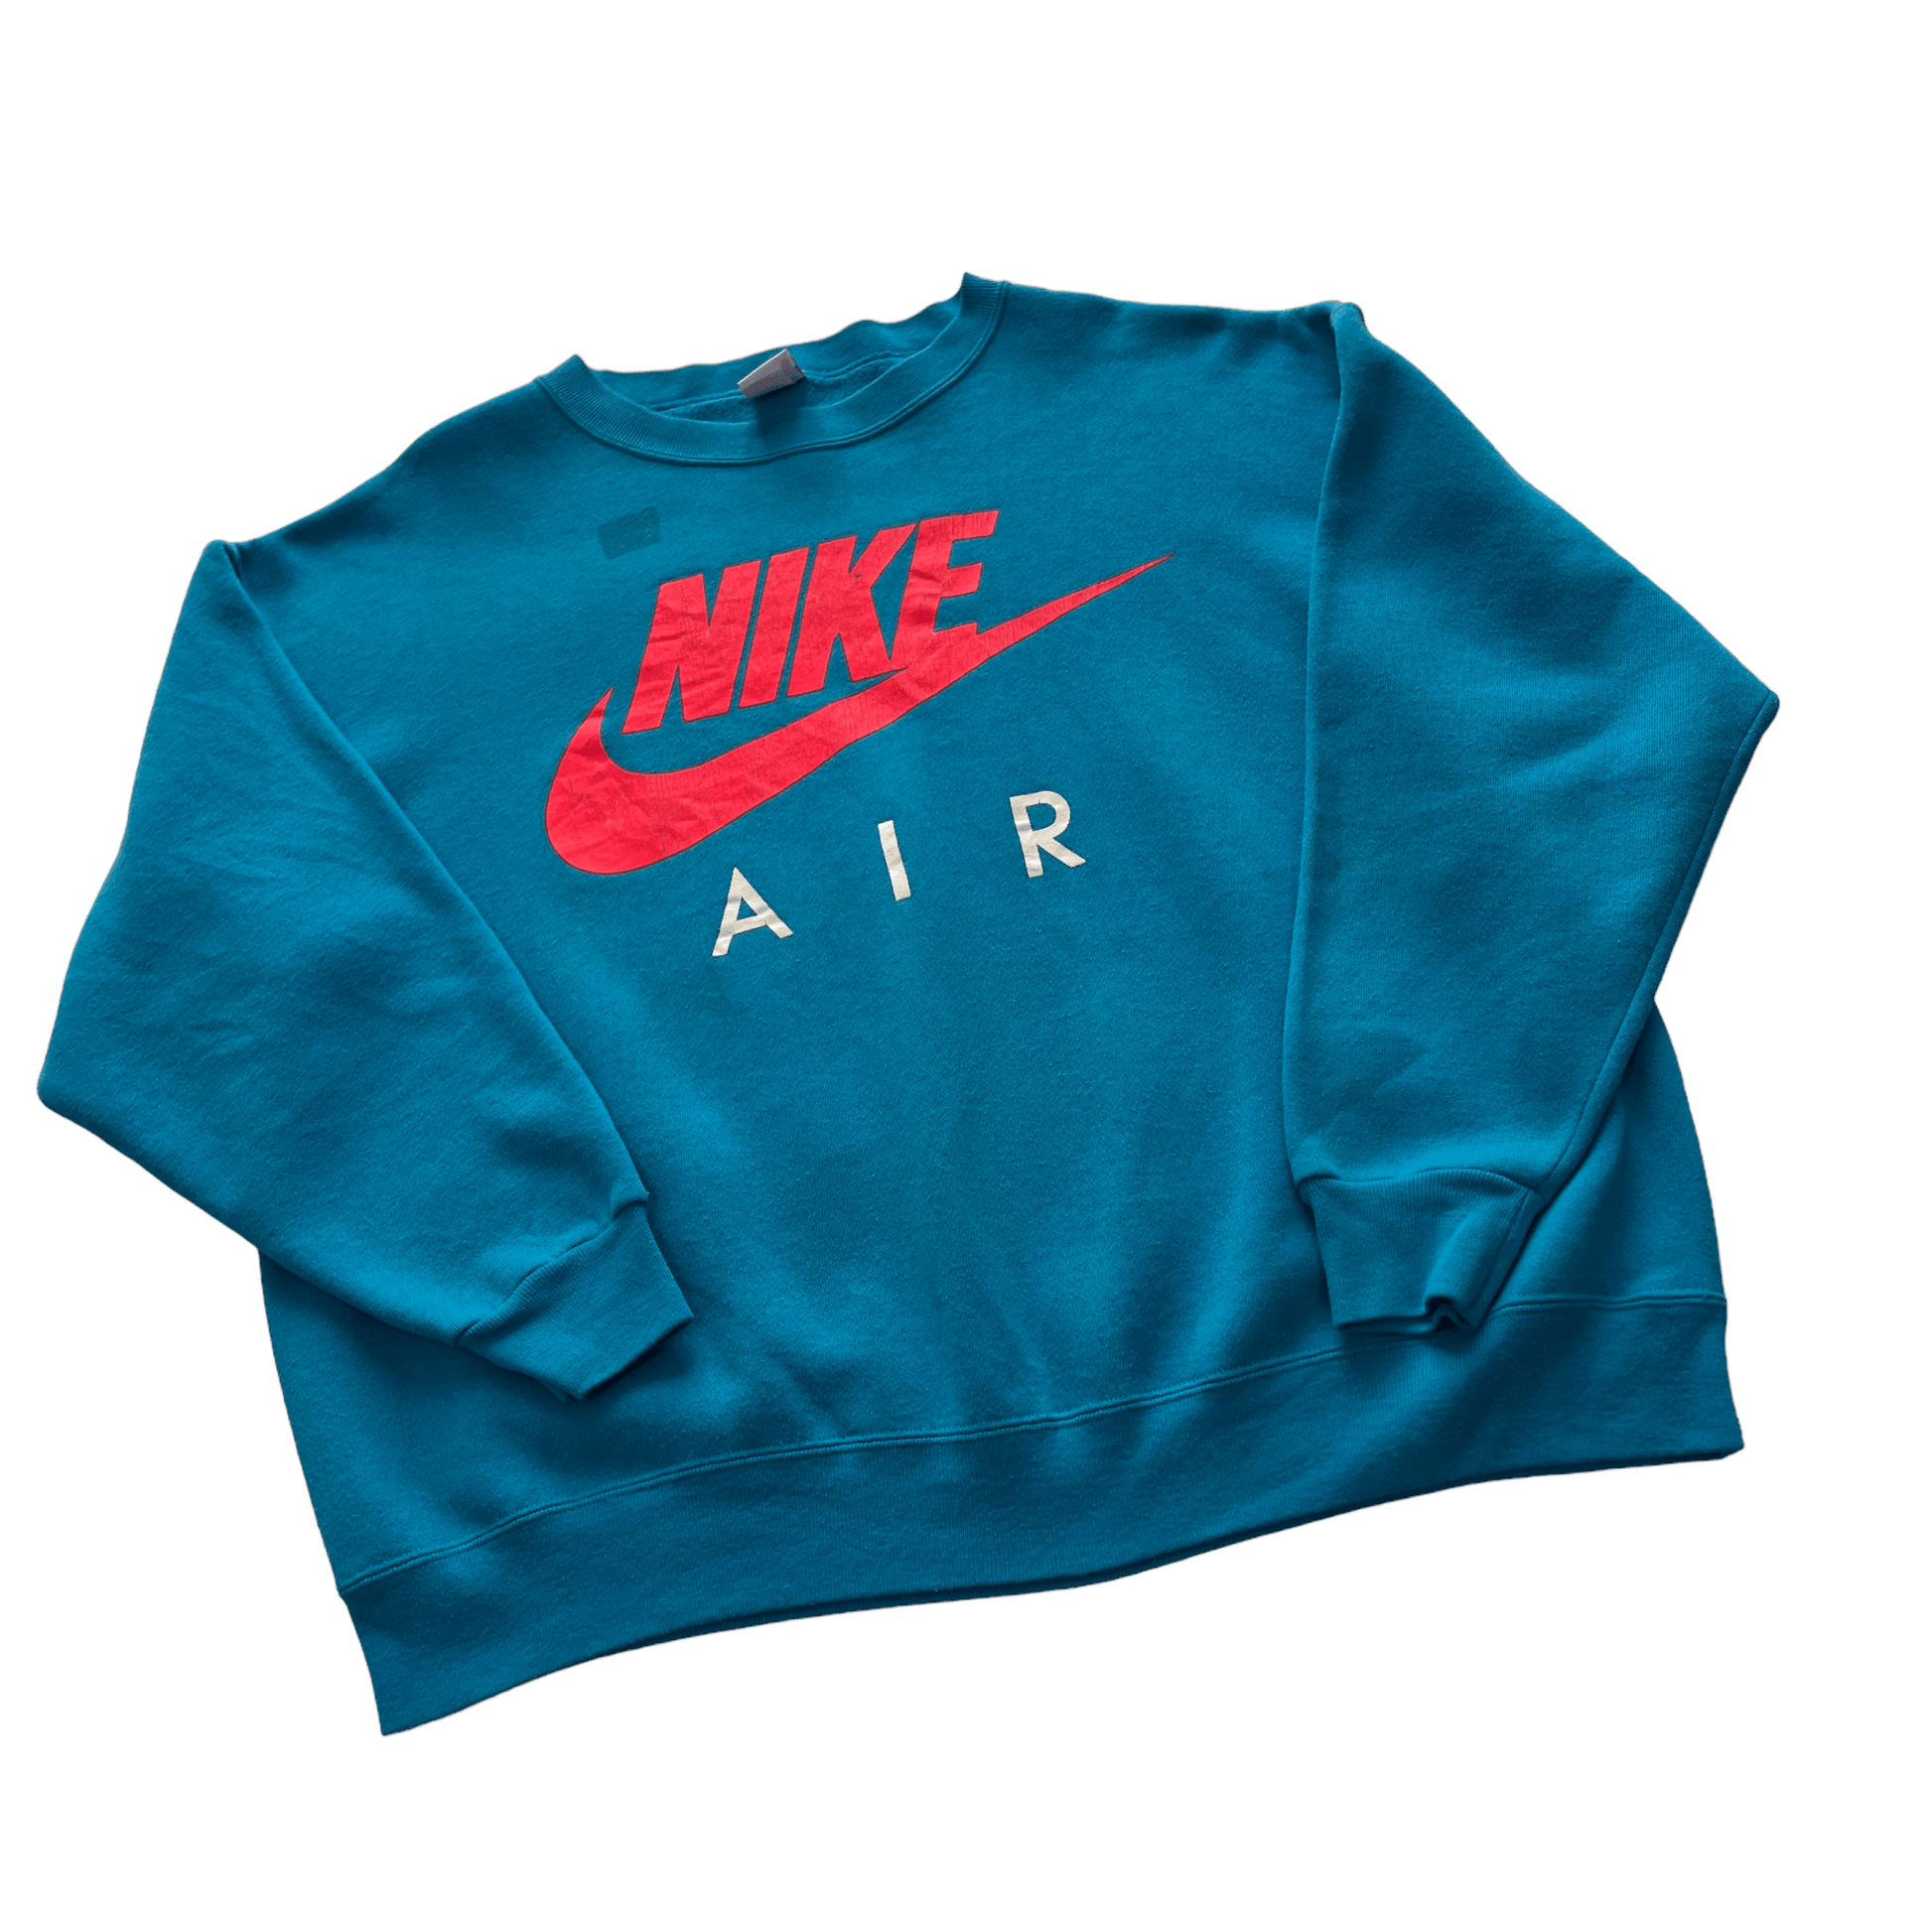 Vintage 90s Blue Nike Sweatshirt - Extra Large - The Streetwear Studio